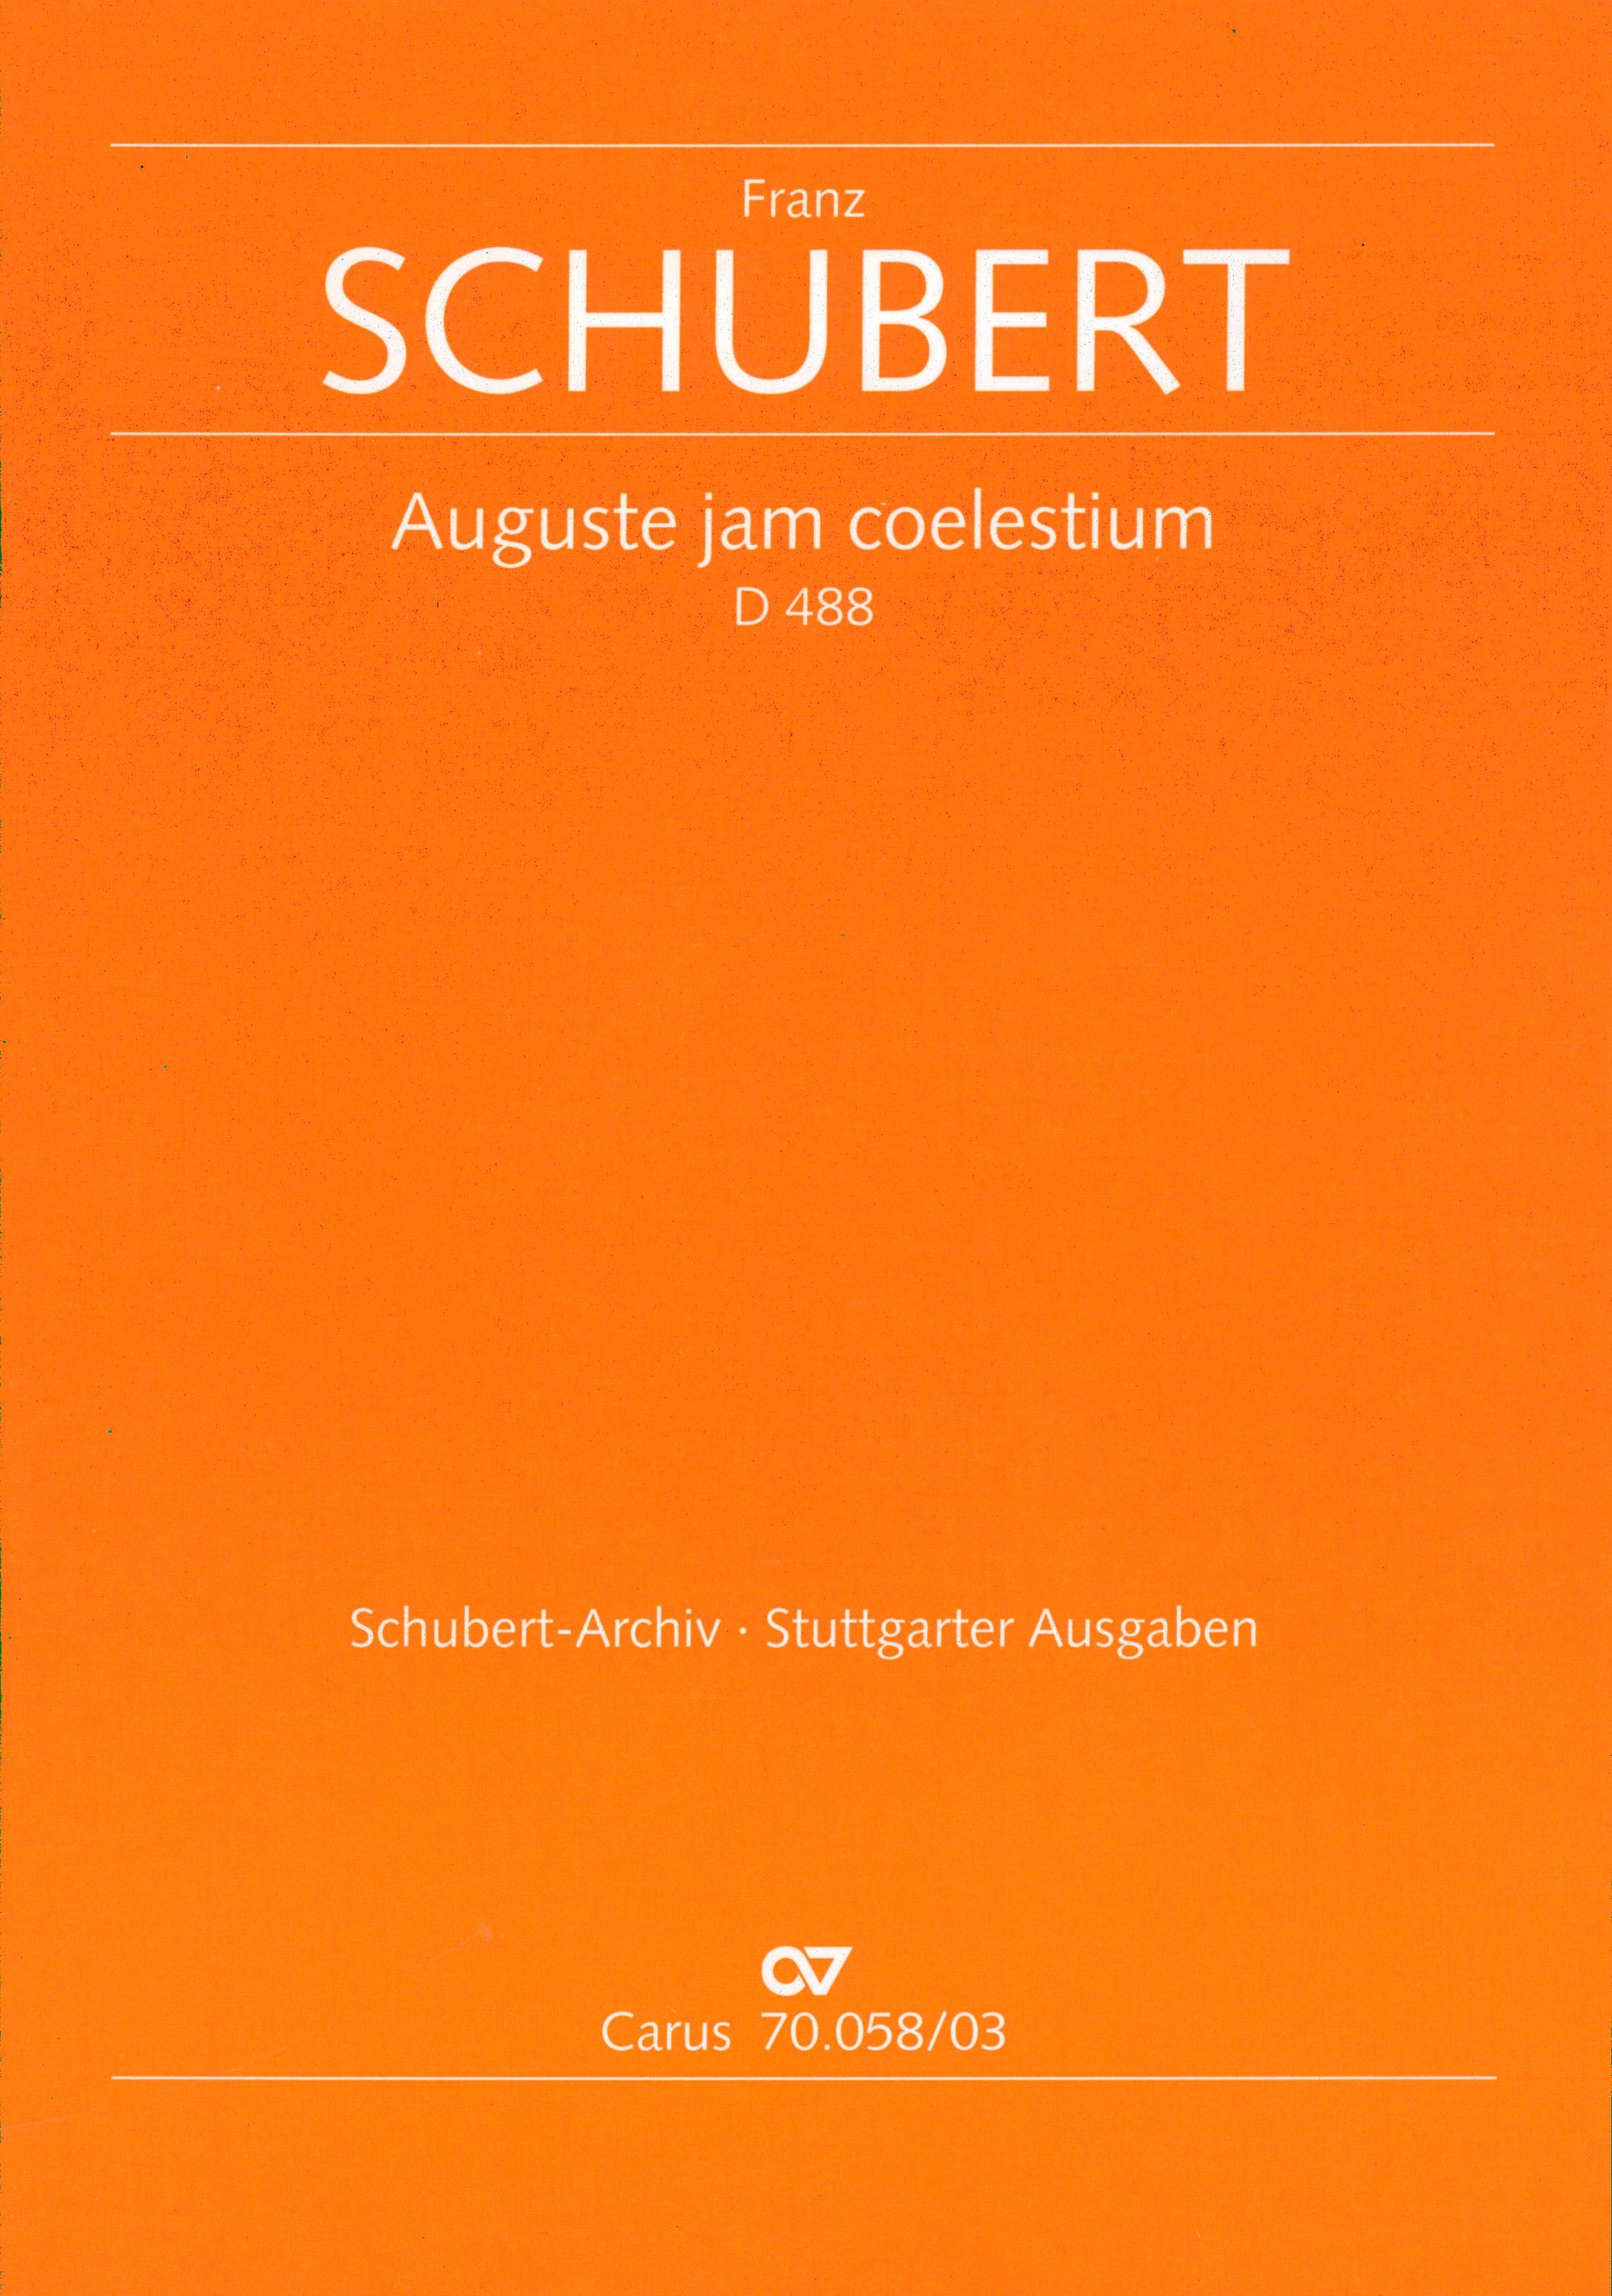 Schubert: Auguste jam coelestium, D. 488